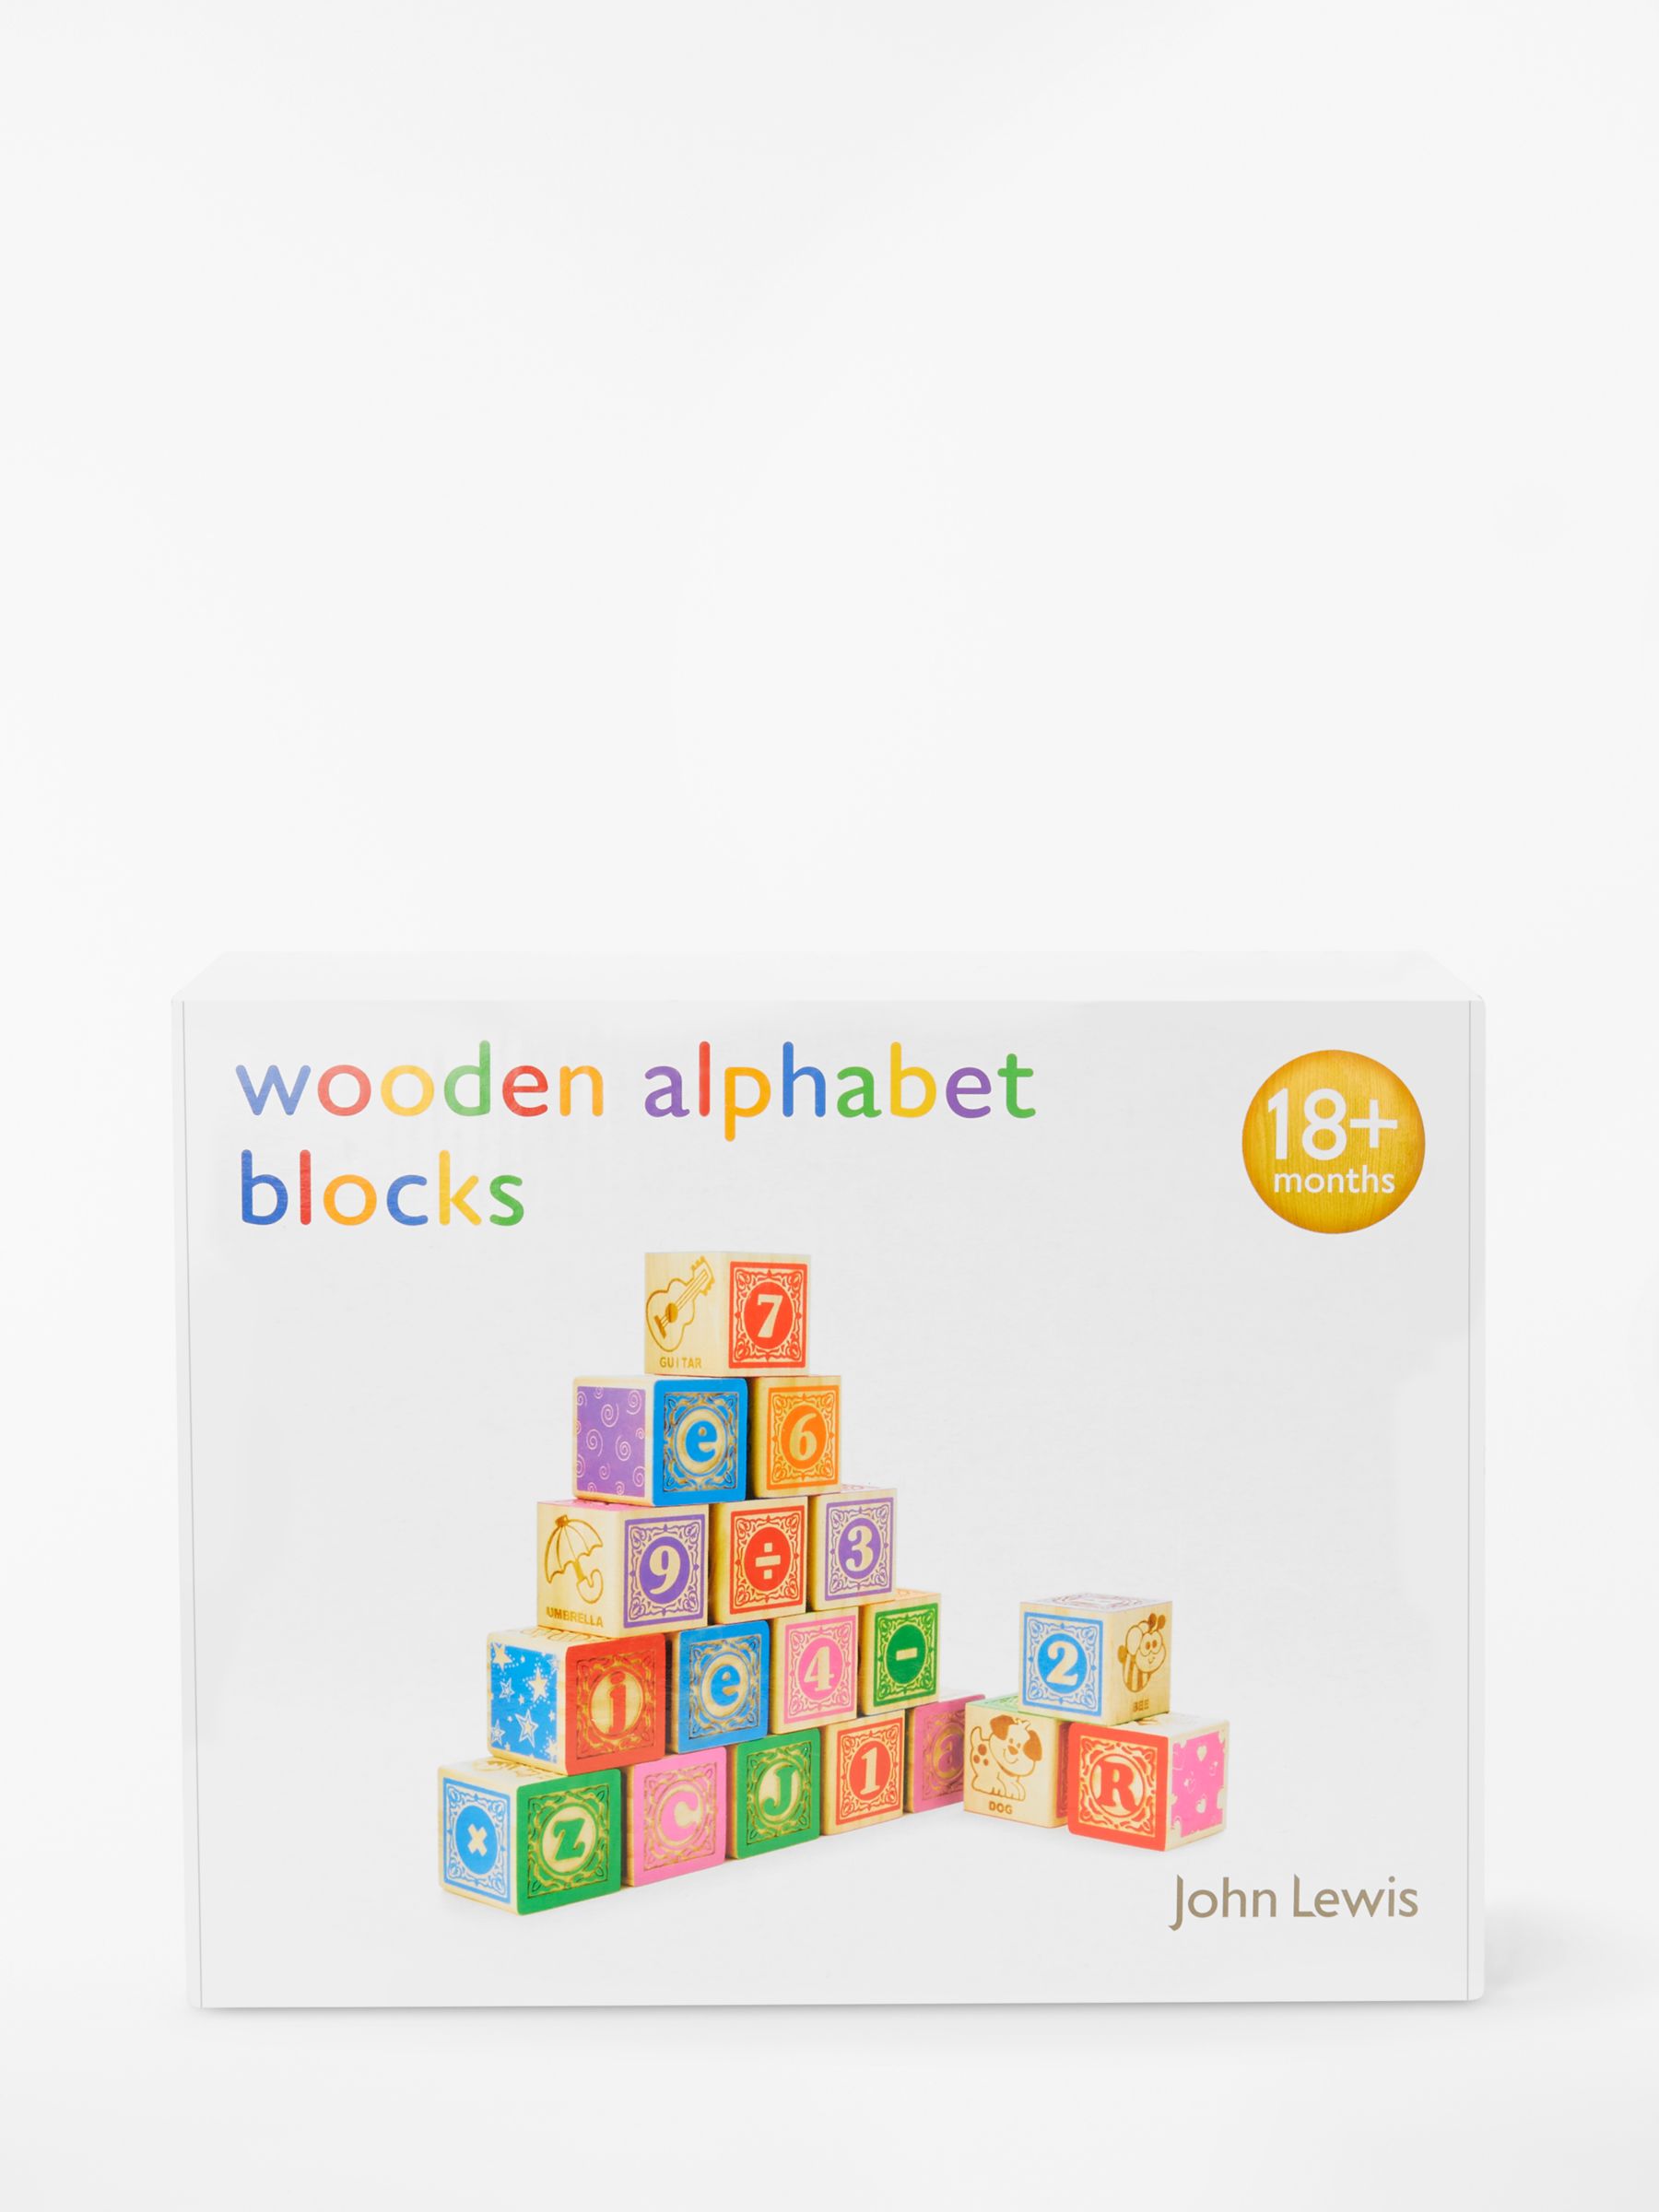 john lewis wooden alphabet blocks